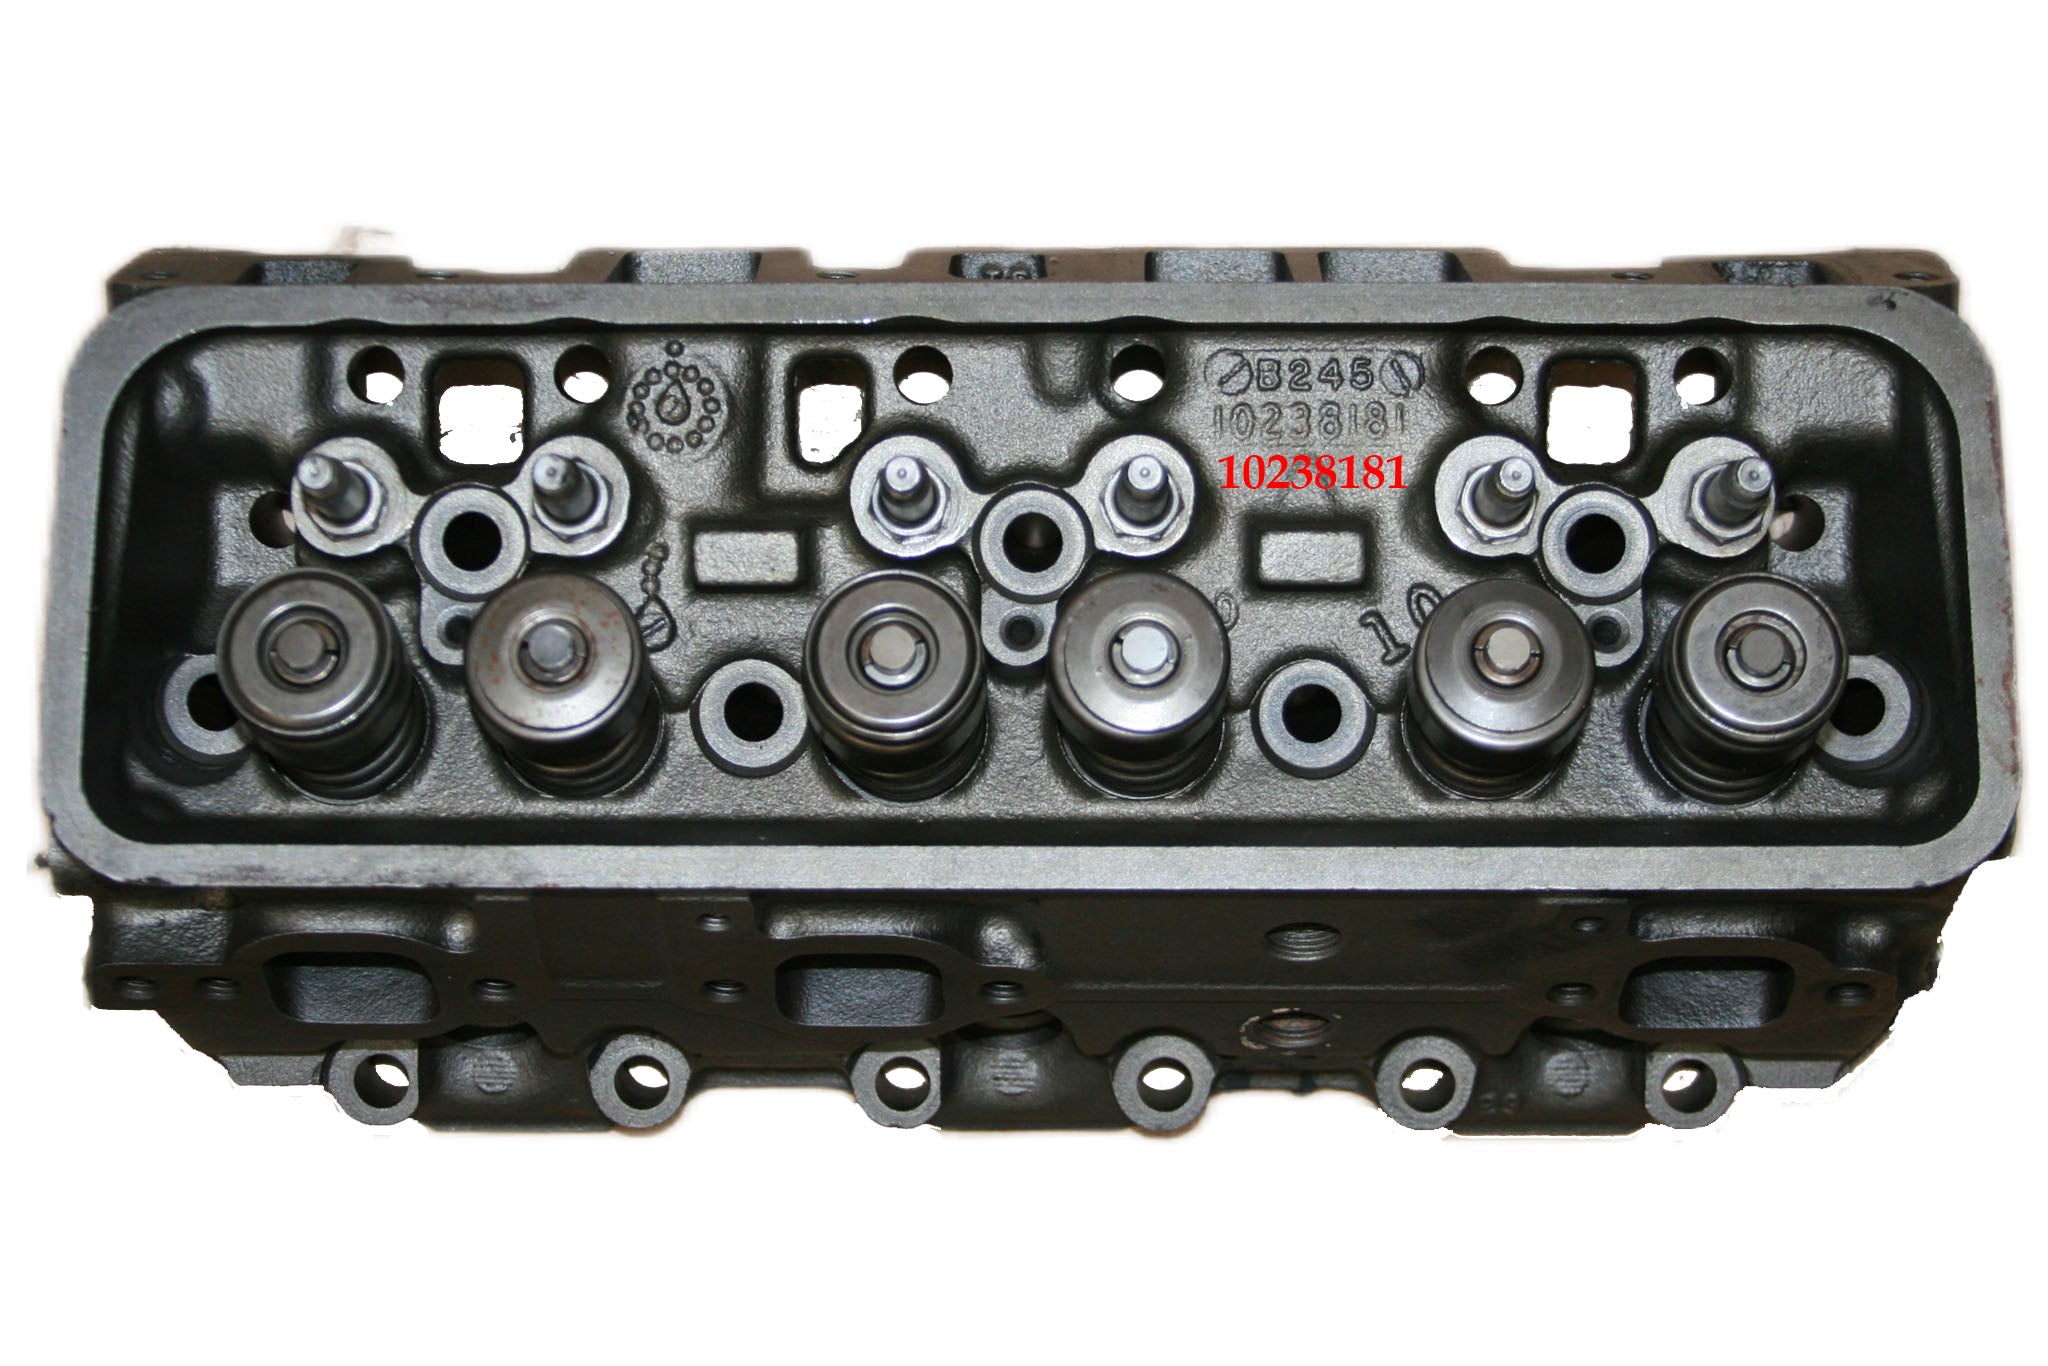 1992-1995 GM Chevy Blazer 4.3L 262 Cylinder head casting # 10238181